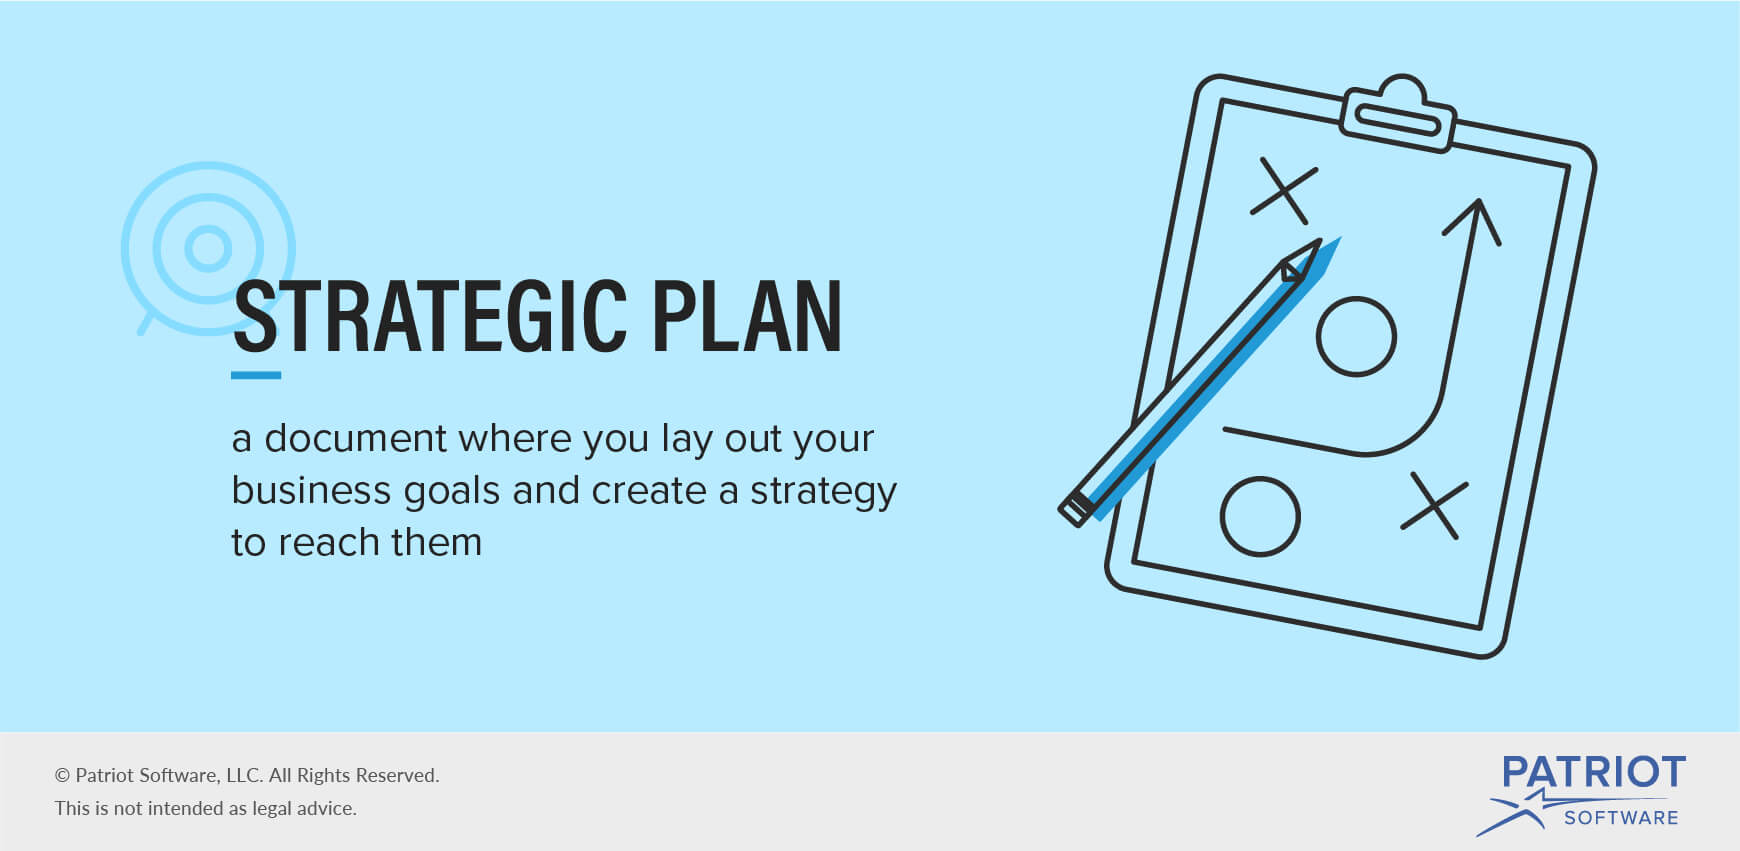 Strategic plan definition